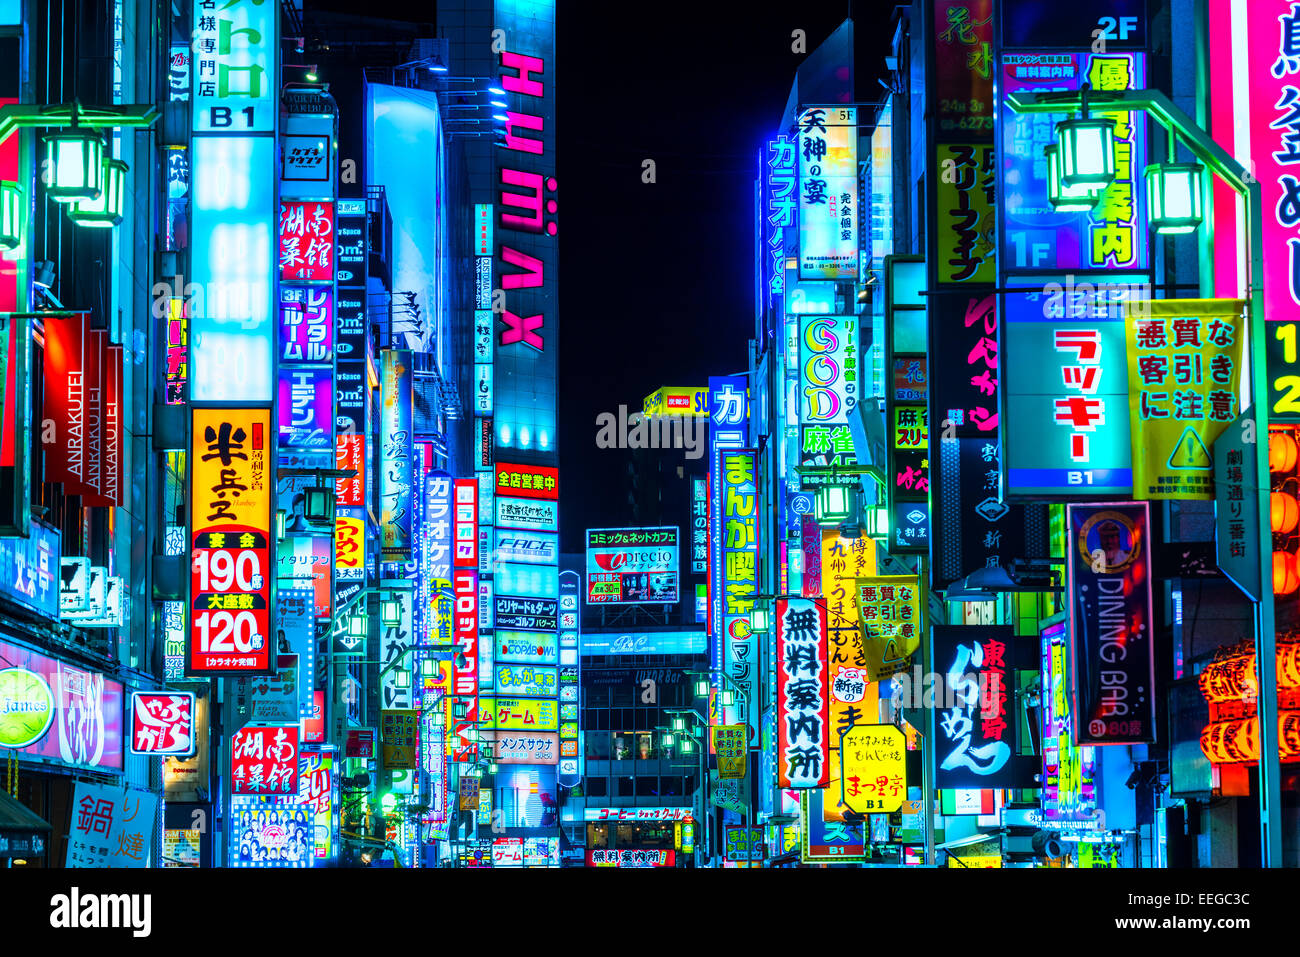 TOKYO - NOVEMBER 13: Billboards in Shinjuku's Kabuki-cho district November 13, 2014 in Tokyo, JP. The area is a nightlife distri Stock Photo